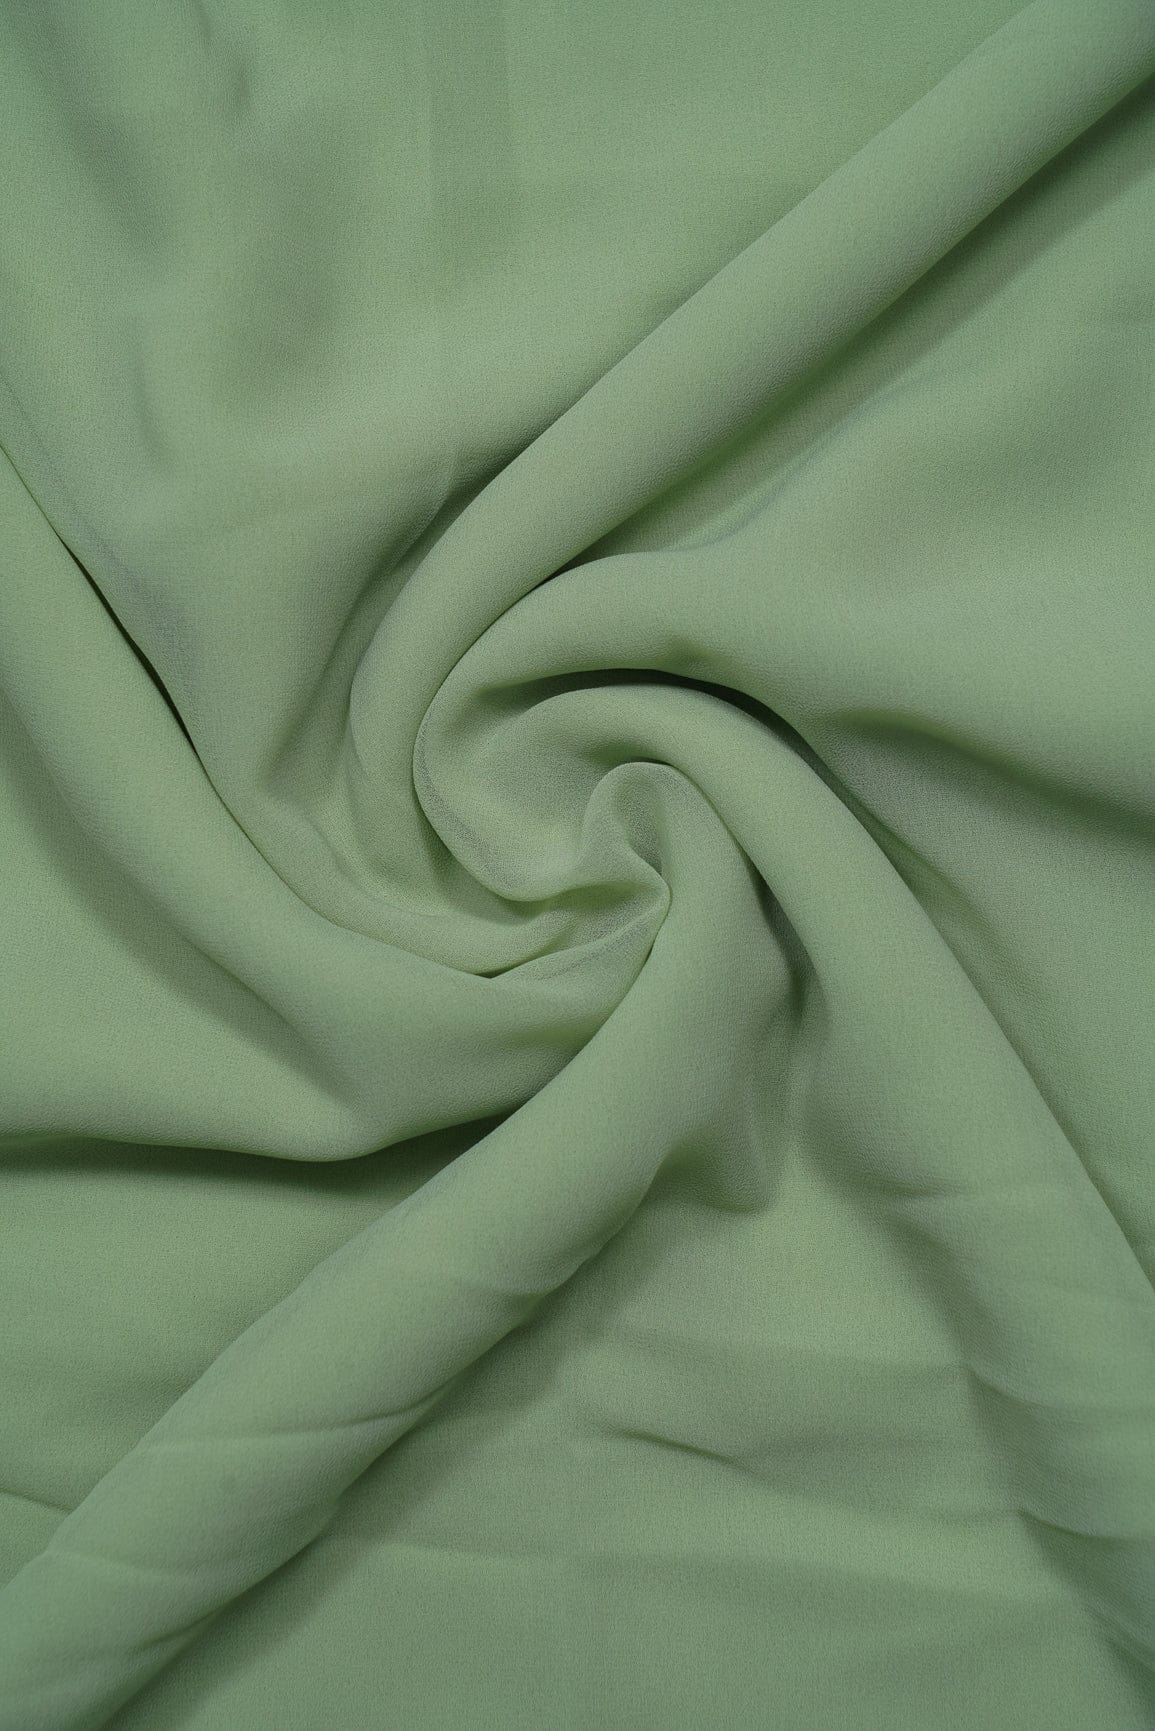 doeraa Plain Fabrics Olive Green Dyed Georgette Fabric